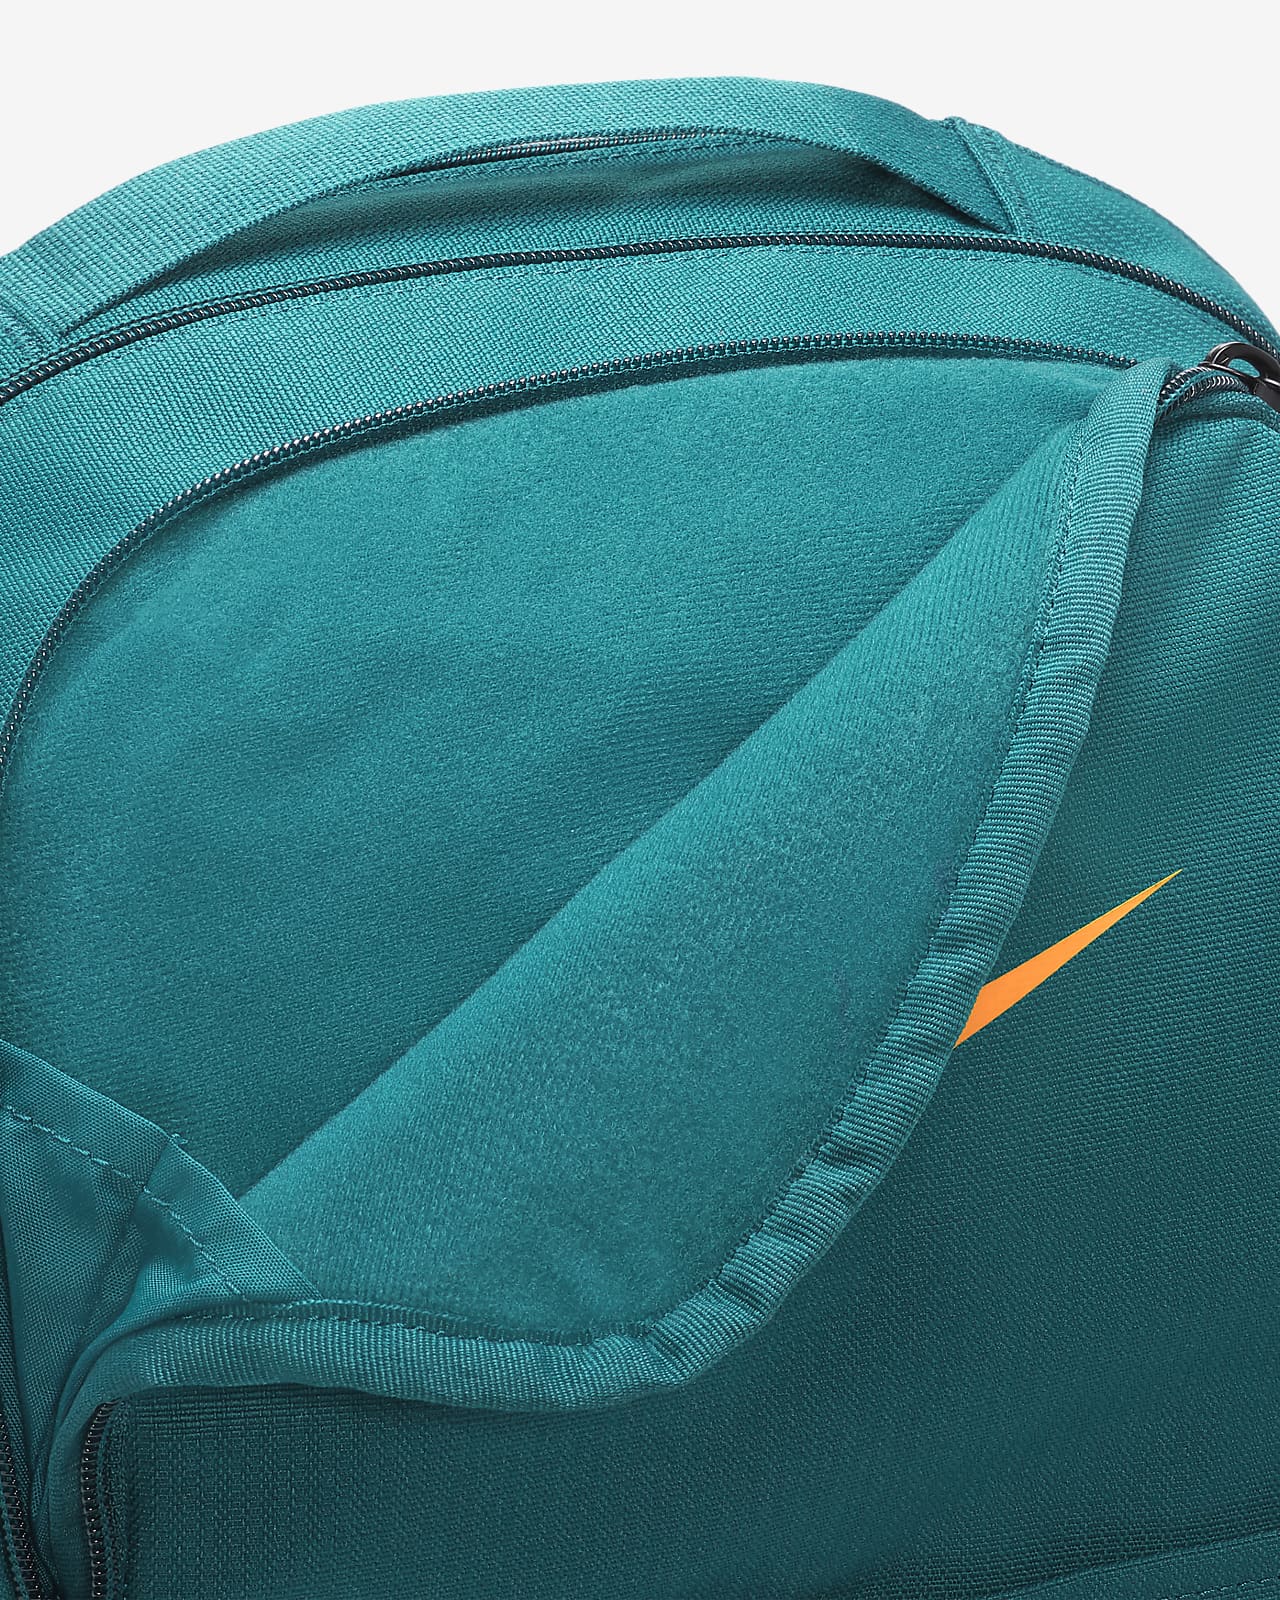 Nike Brasilia 9.5 XL Training Backpack, Men's, Guava Ice/Blk/Brght Crmsn -  Yahoo Shopping